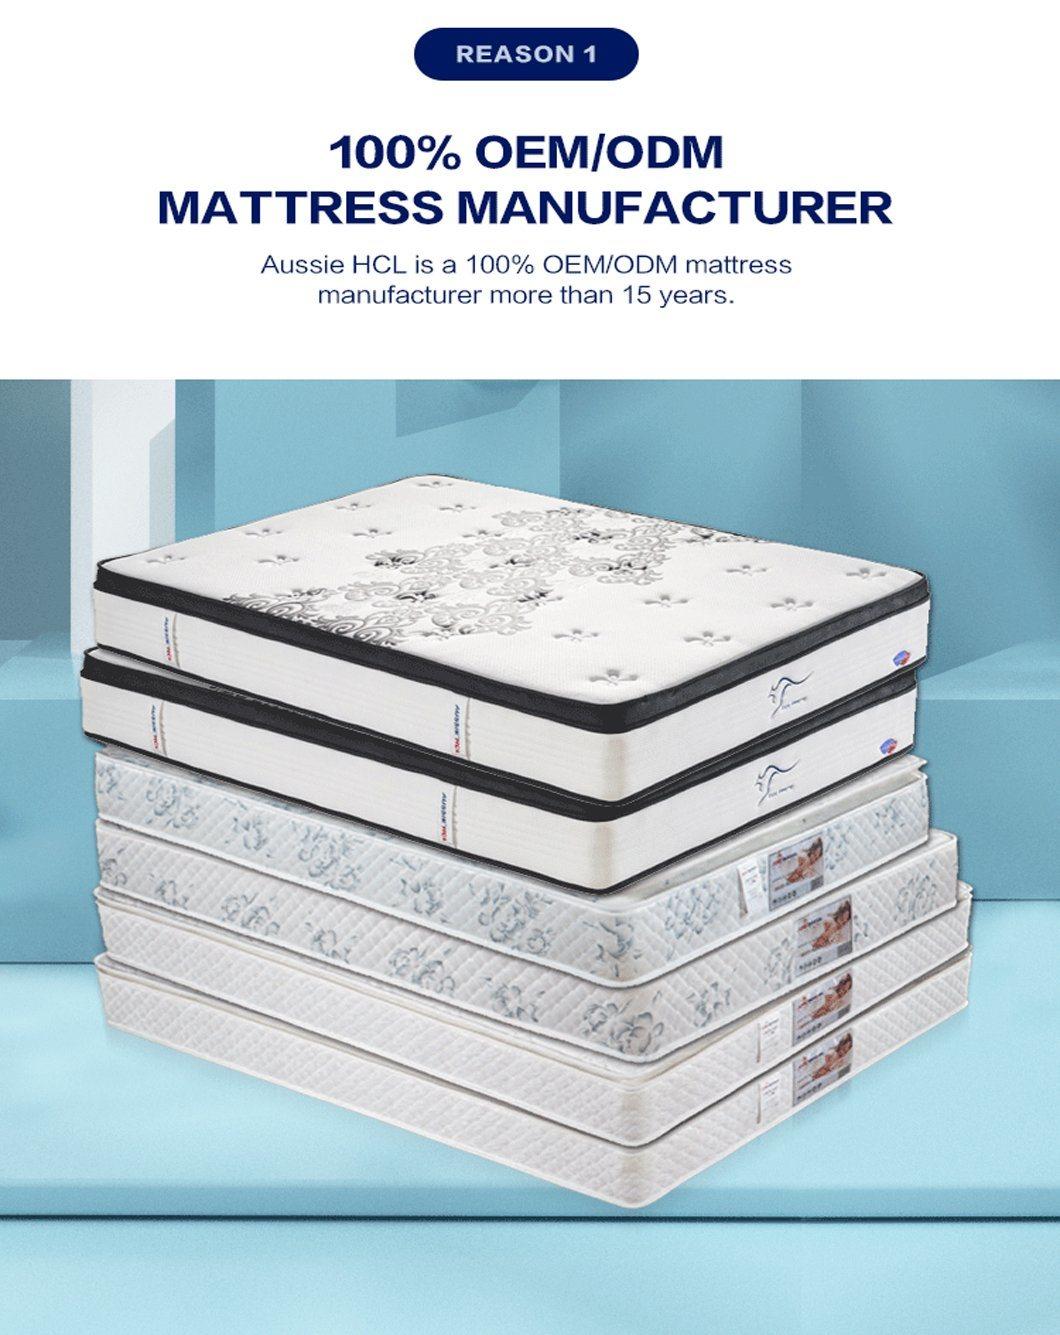 The Best Factory Aussie Roll Sleeping Well King Double Full Size Gel Memory Foam Pocket Spring Mattress